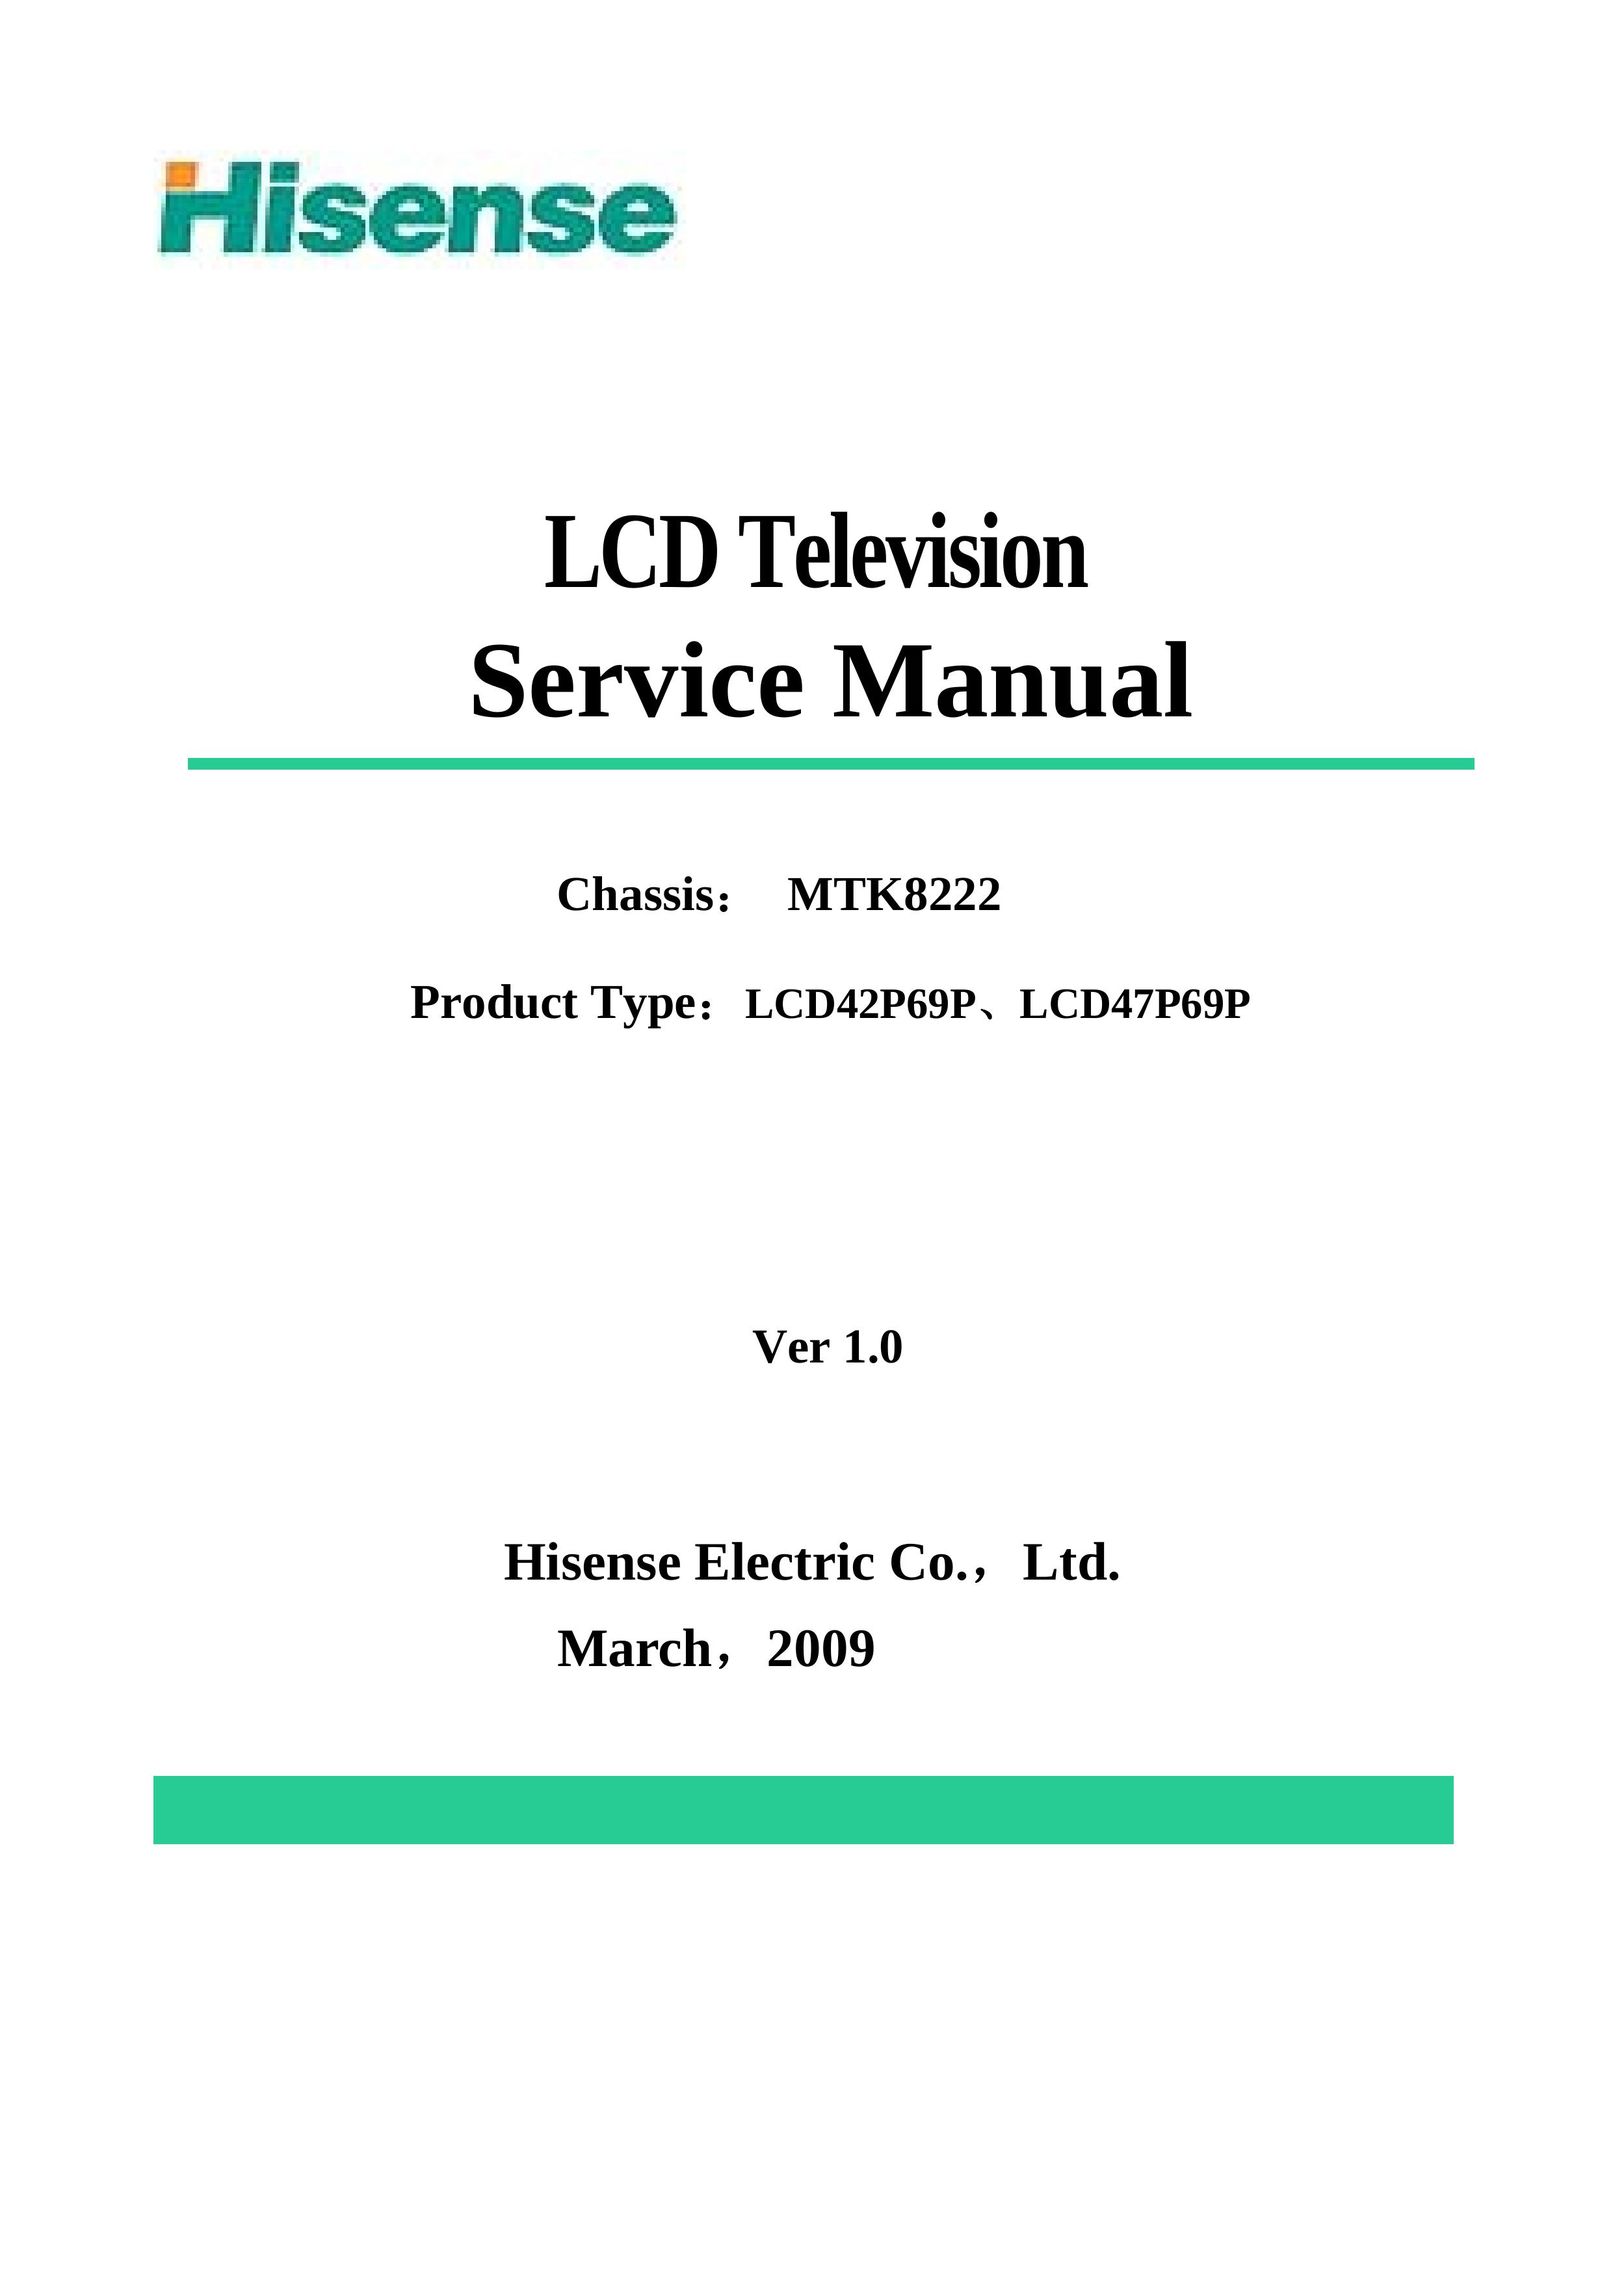 Hisense LCD47P69P Flat Panel Television User Manual